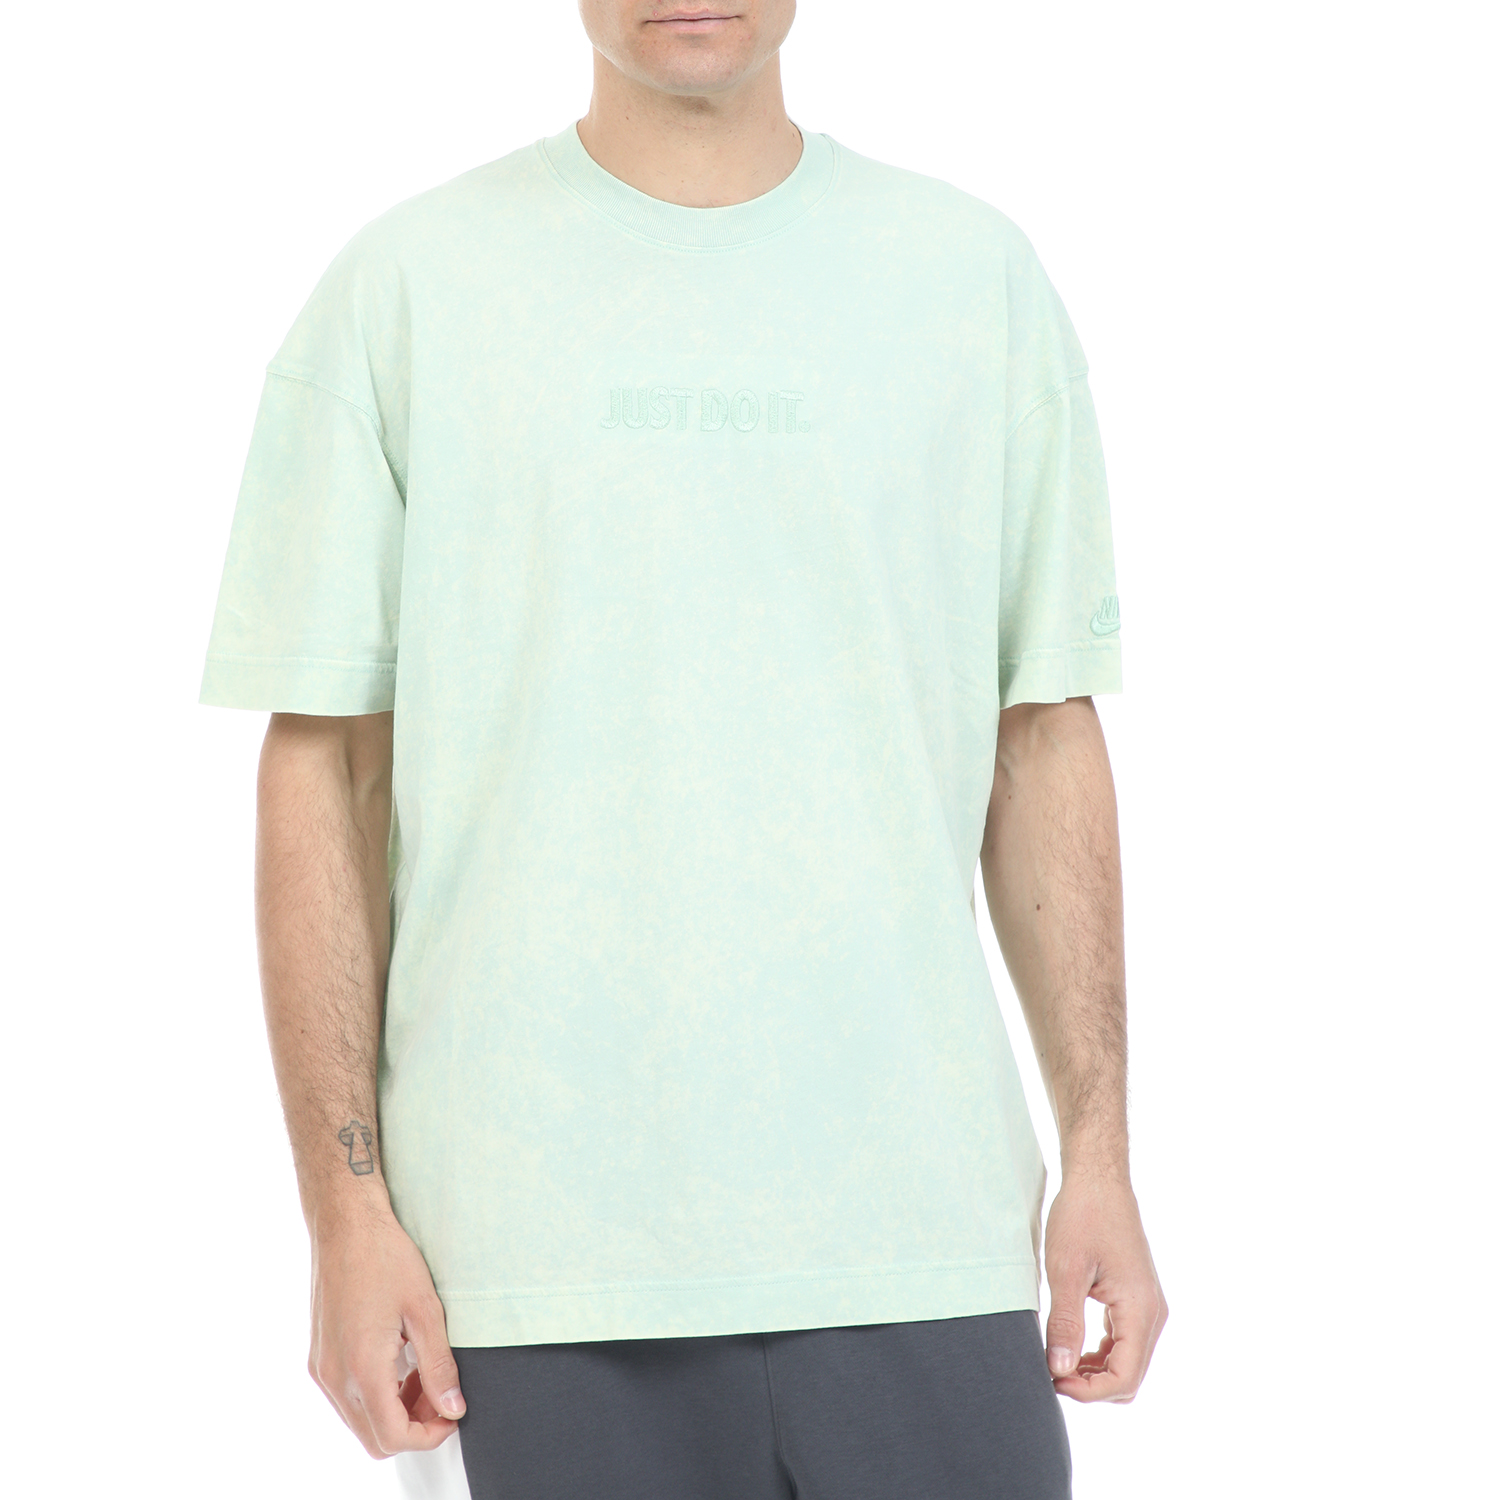 NIKE - Ανδρικό t-shirt NIKE NSW JDI TOP SS WASH πράσινο Ανδρικά/Ρούχα/Αθλητικά/T-shirt